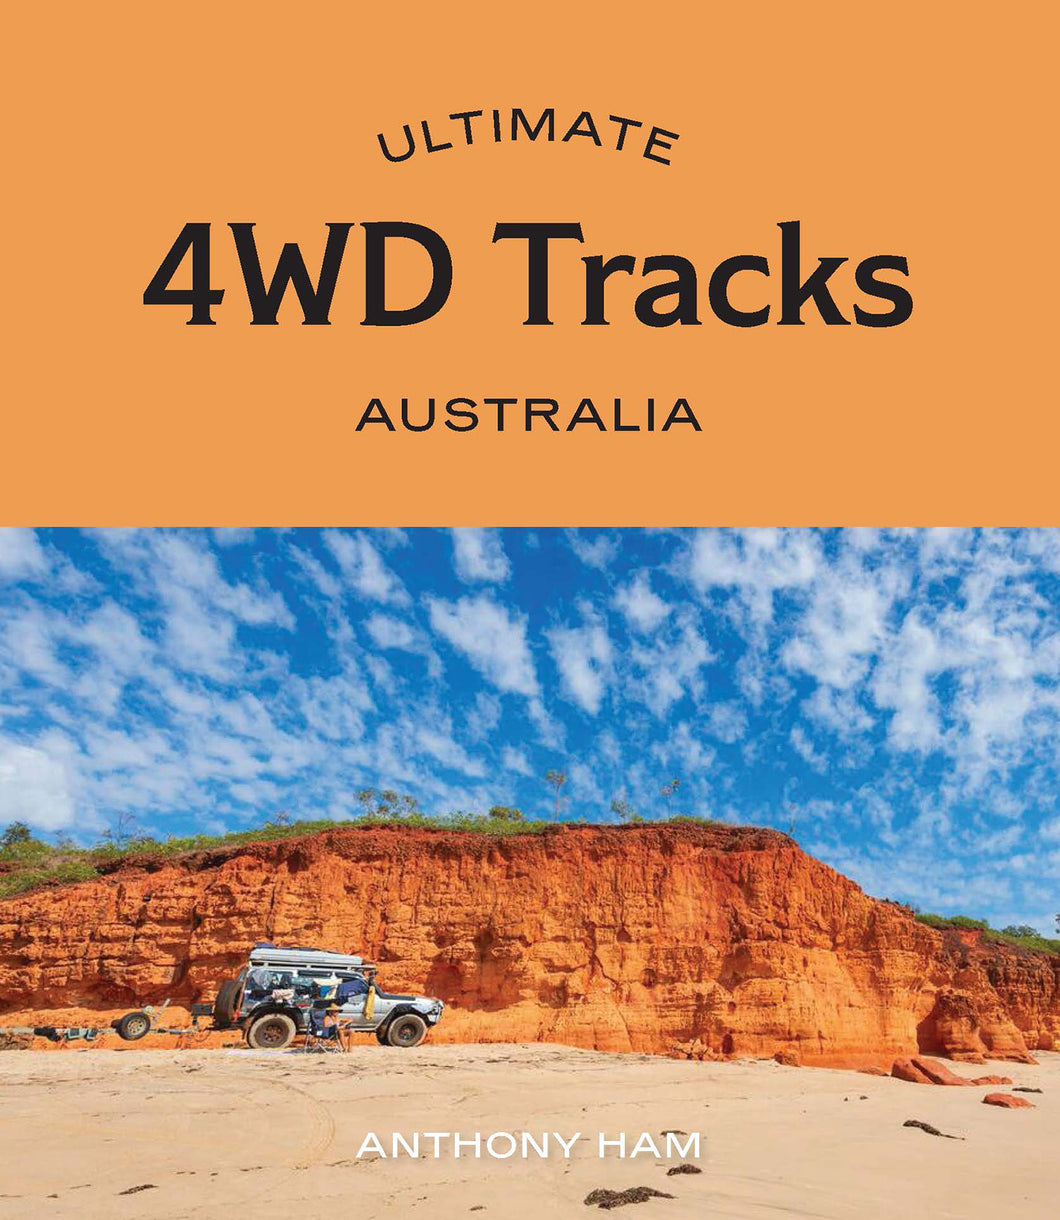 Ultimate 4wd Tracks Australia